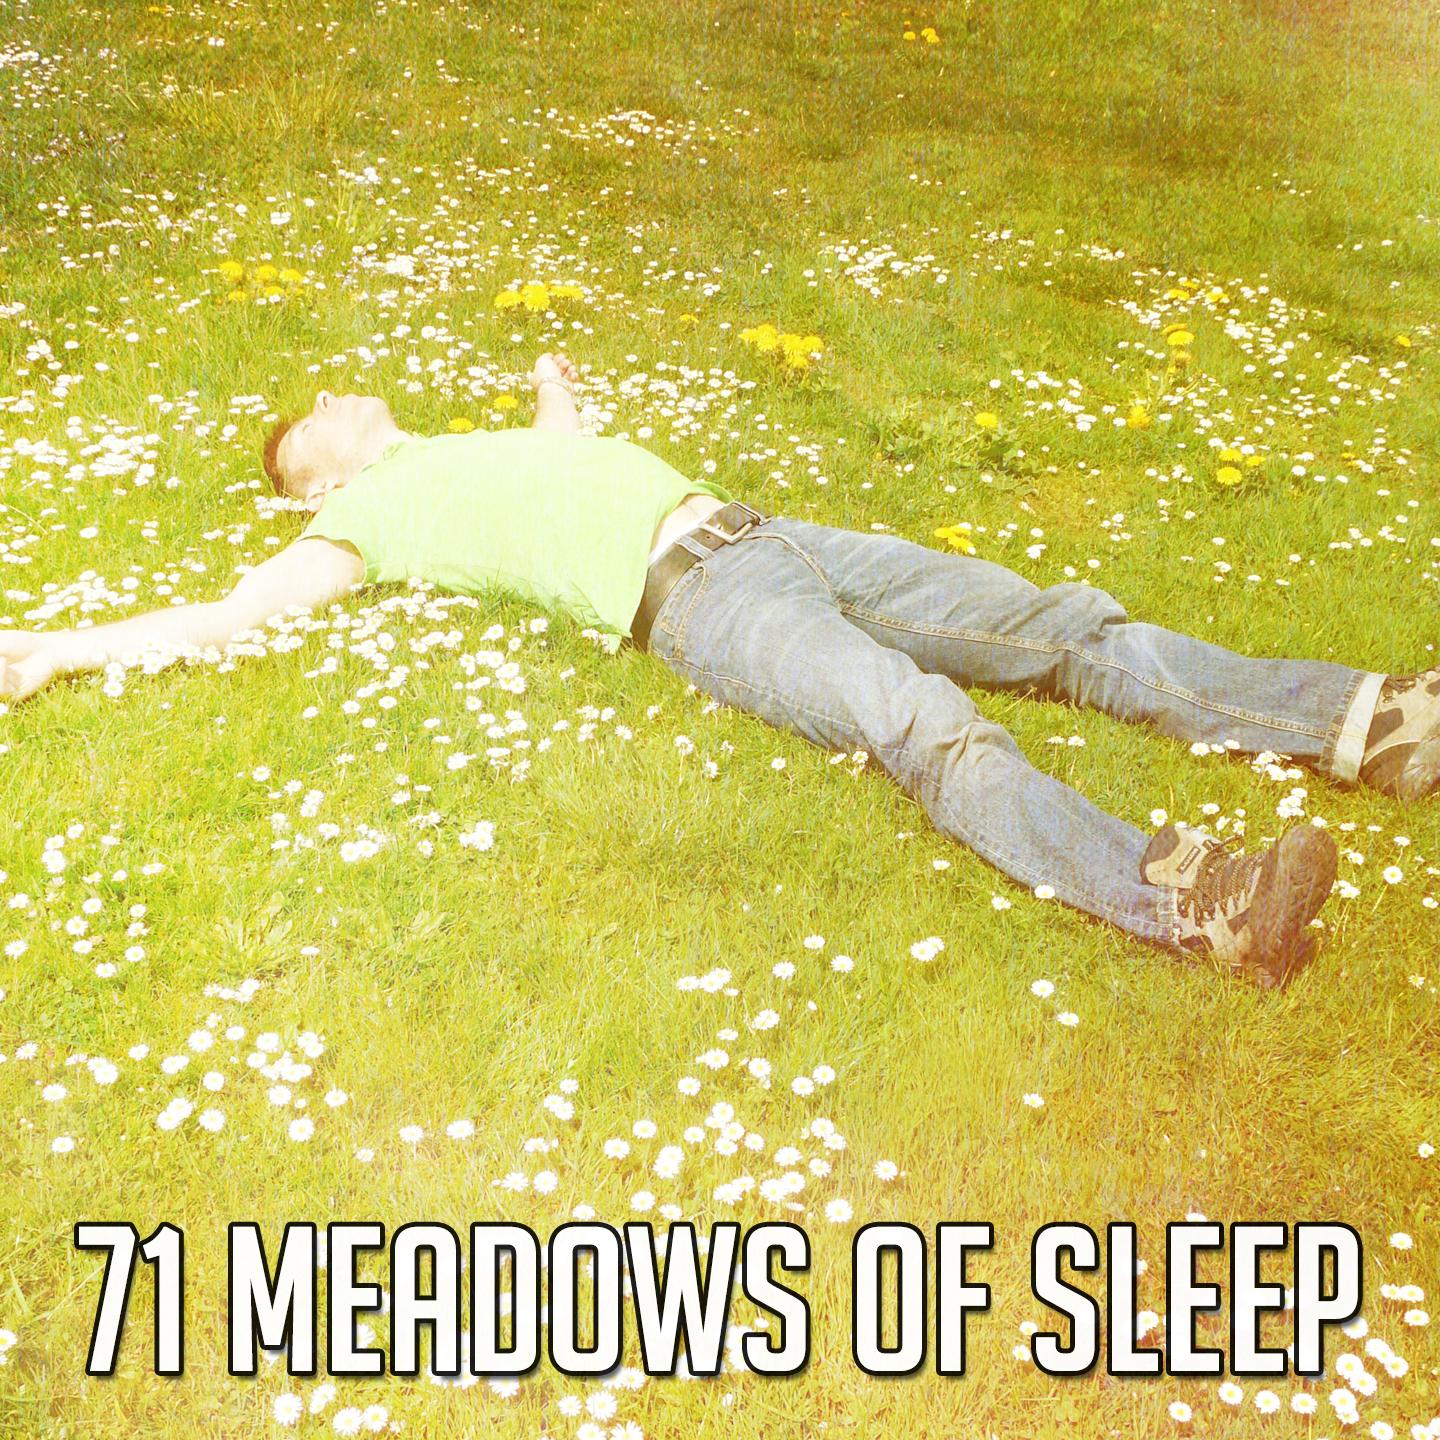 71 Meadows of Sleep